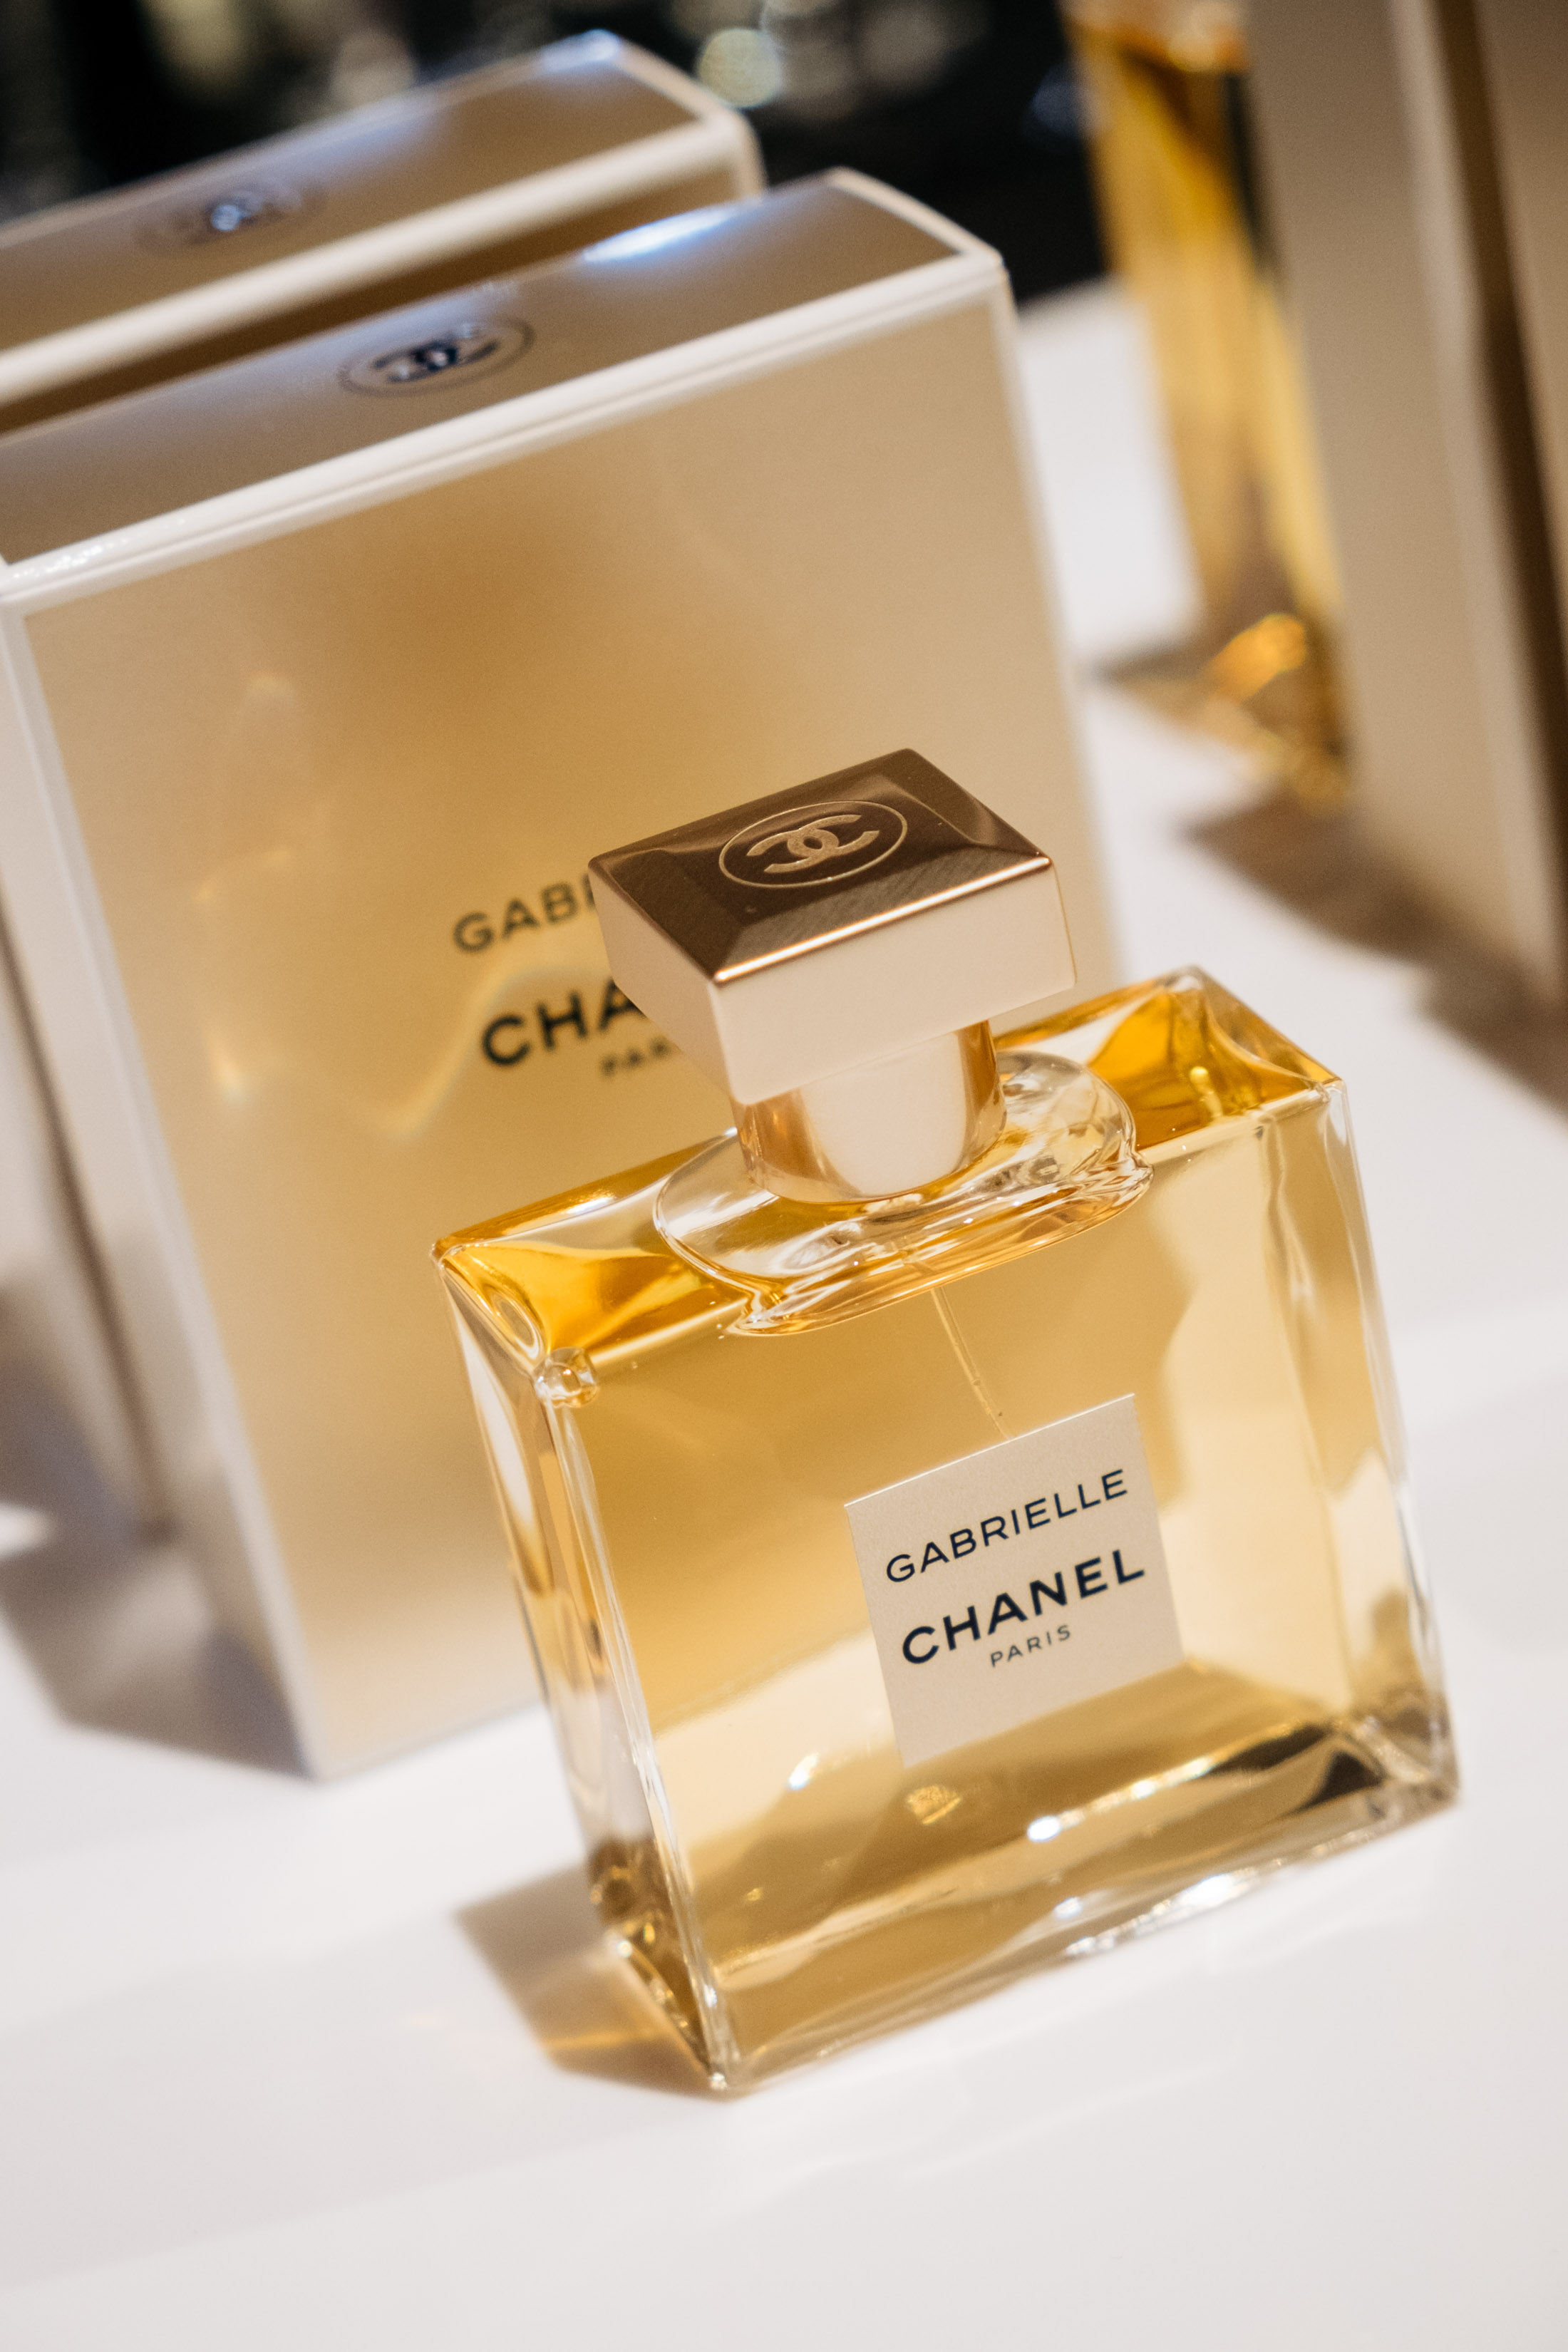 The Gabrielle Chanel Fragrance